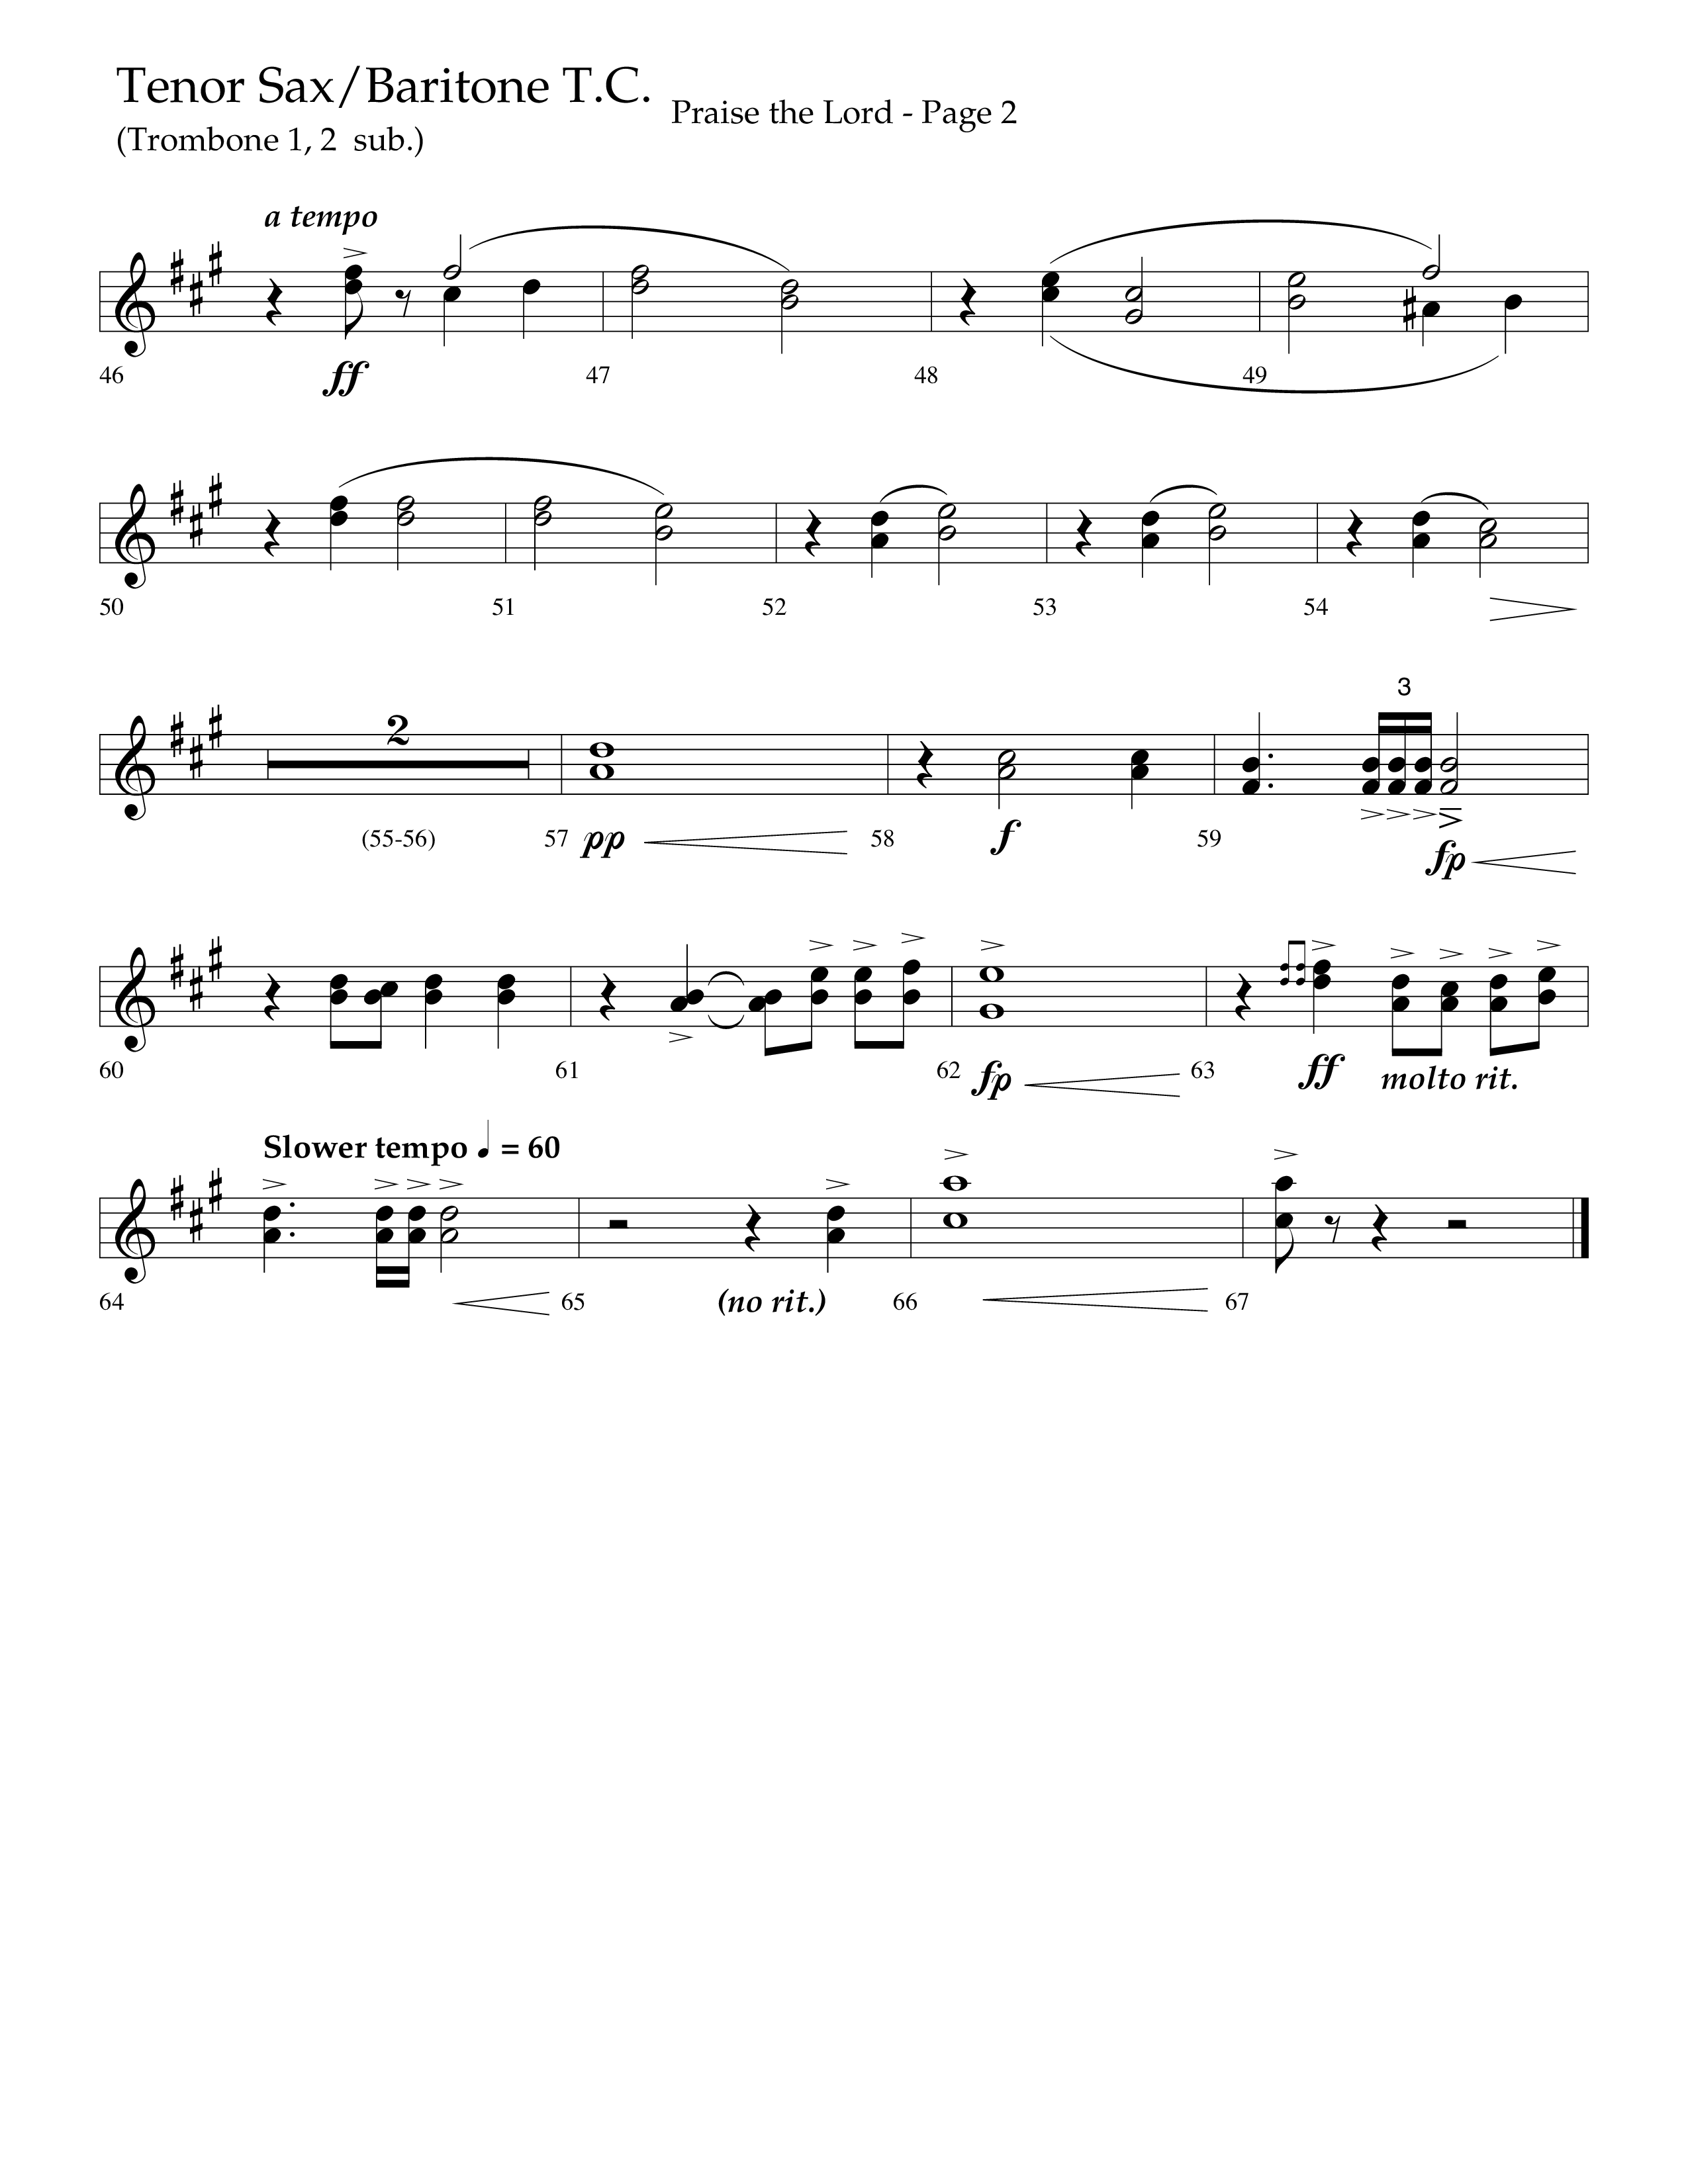 Praise The Lord (Choral Anthem SATB) Tenor Sax/Baritone T.C. (Lifeway Choral / Arr. Marty Hamby)